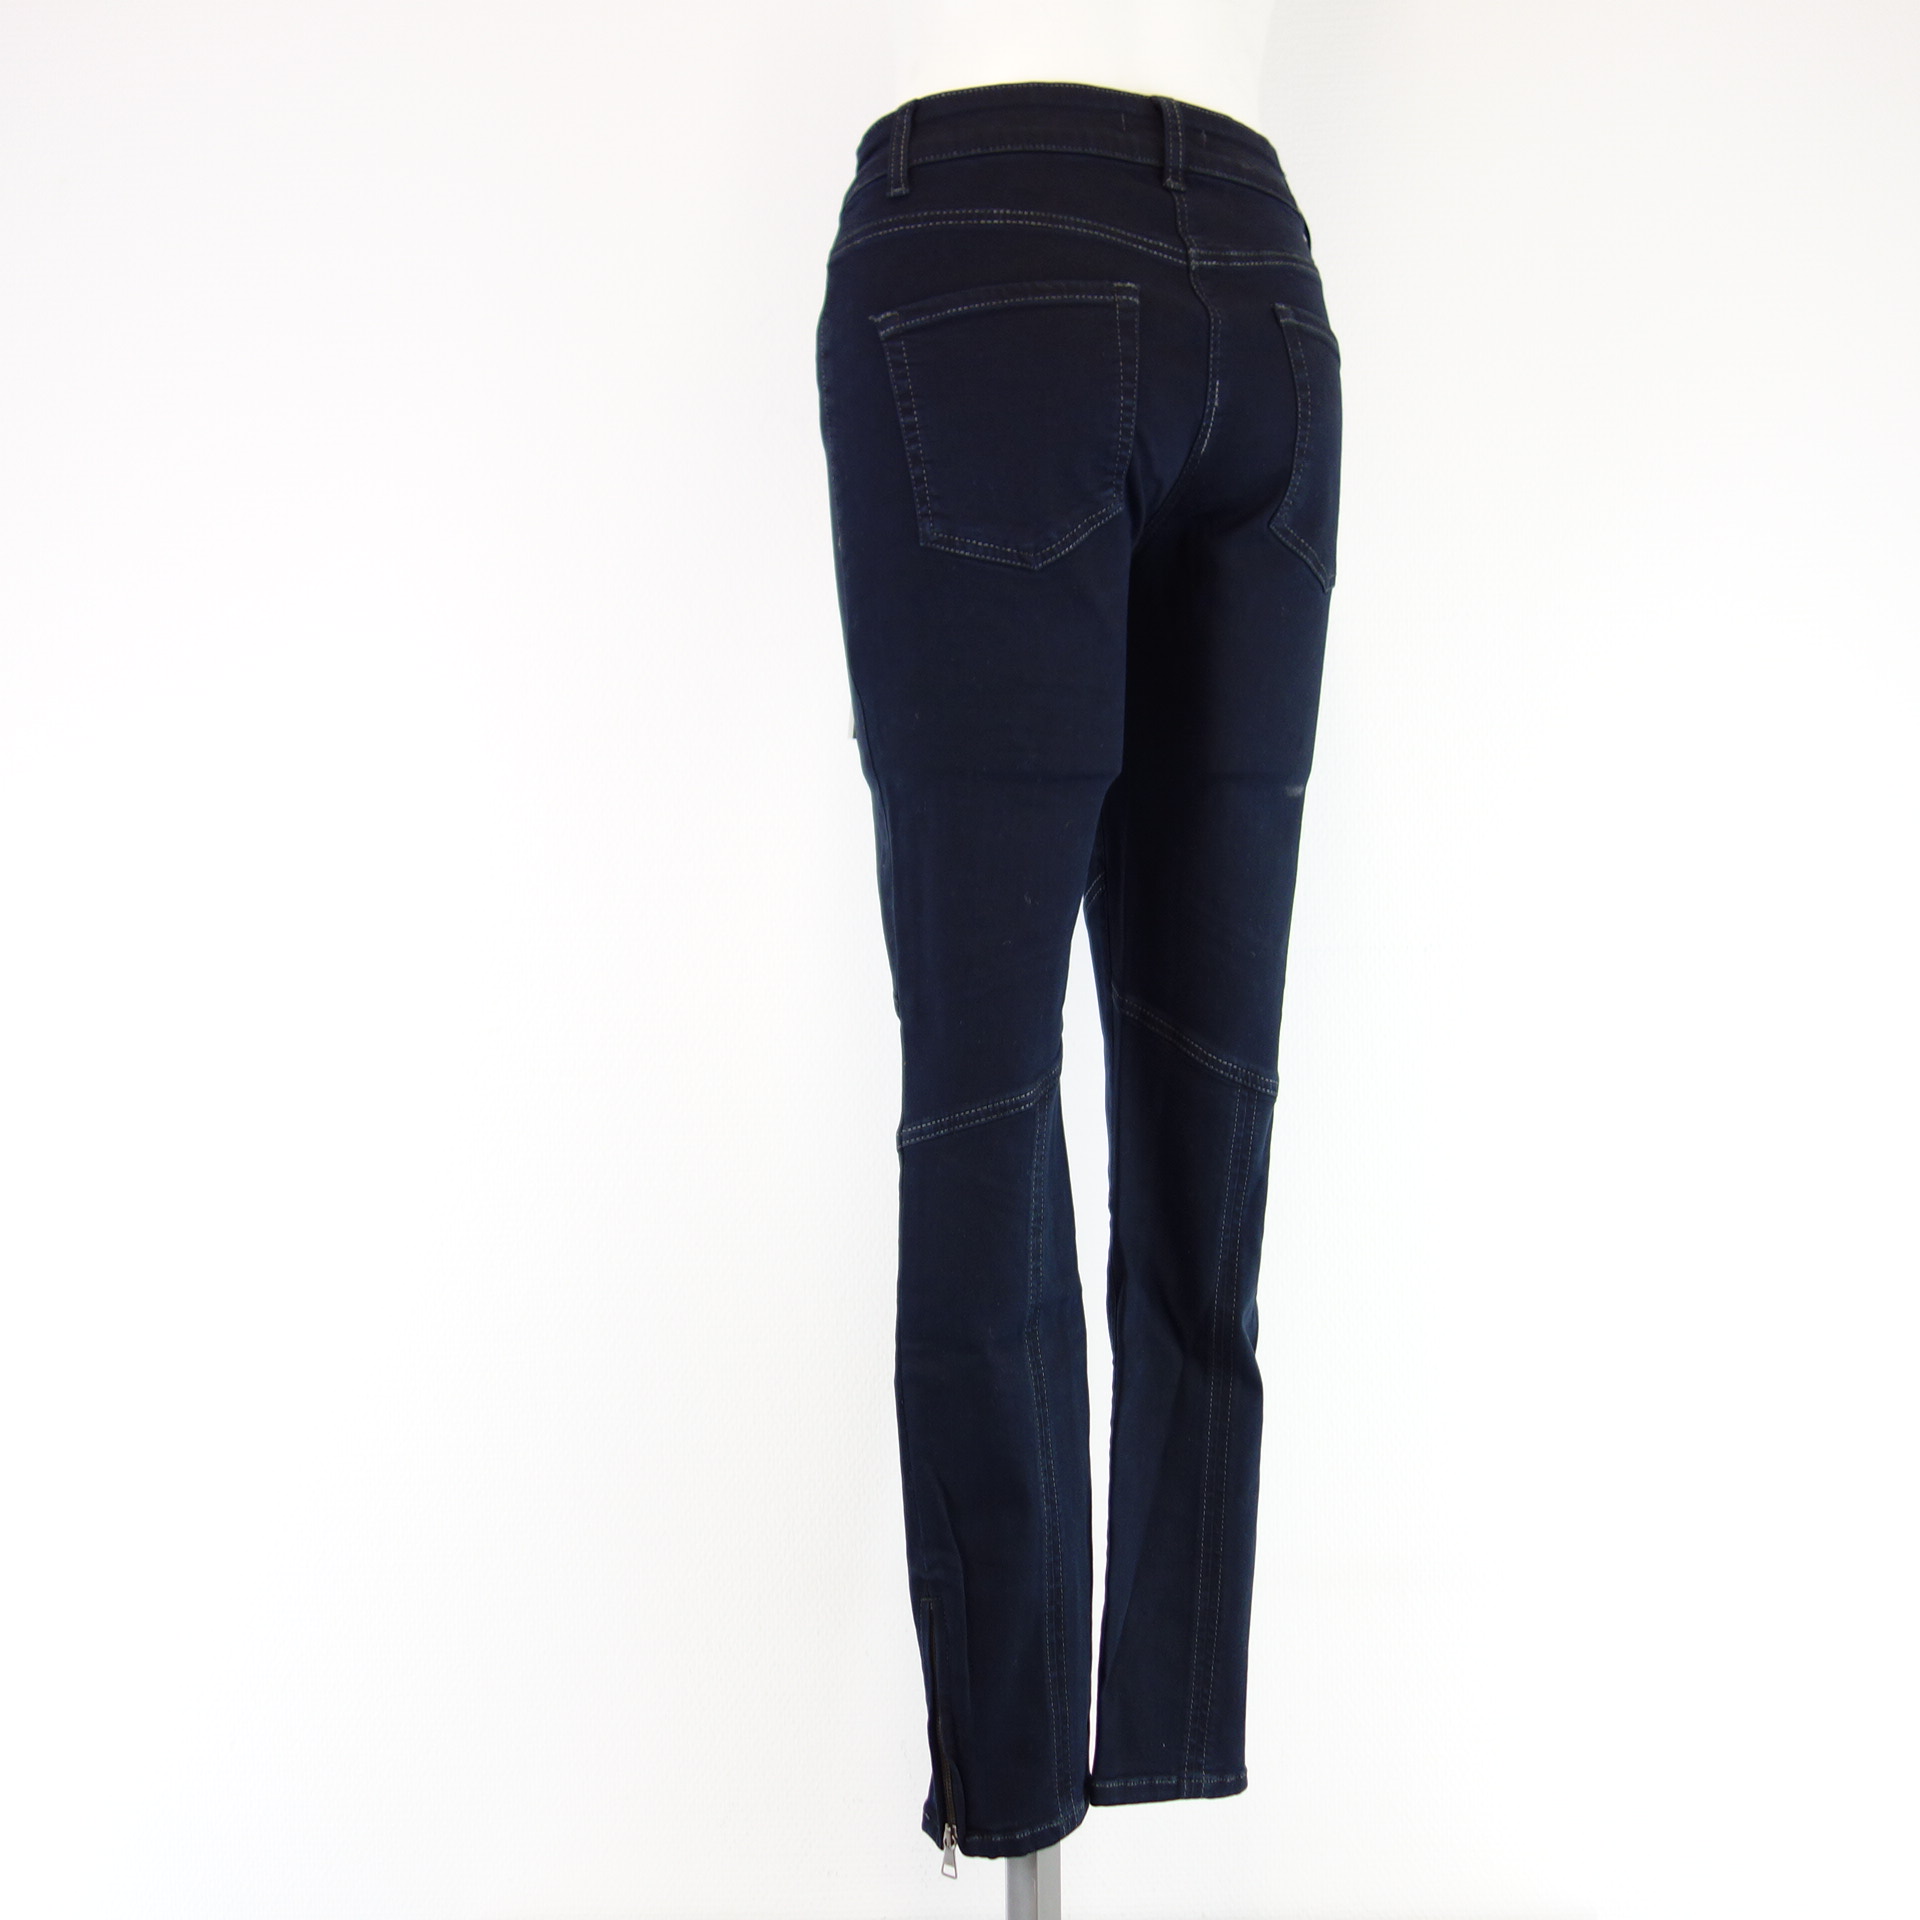 CAMBIO Vintage Edition Damen Jeans Hose Jeanshose Navy Dunkel Blau Modell Parla Skinny Stretch Biker 